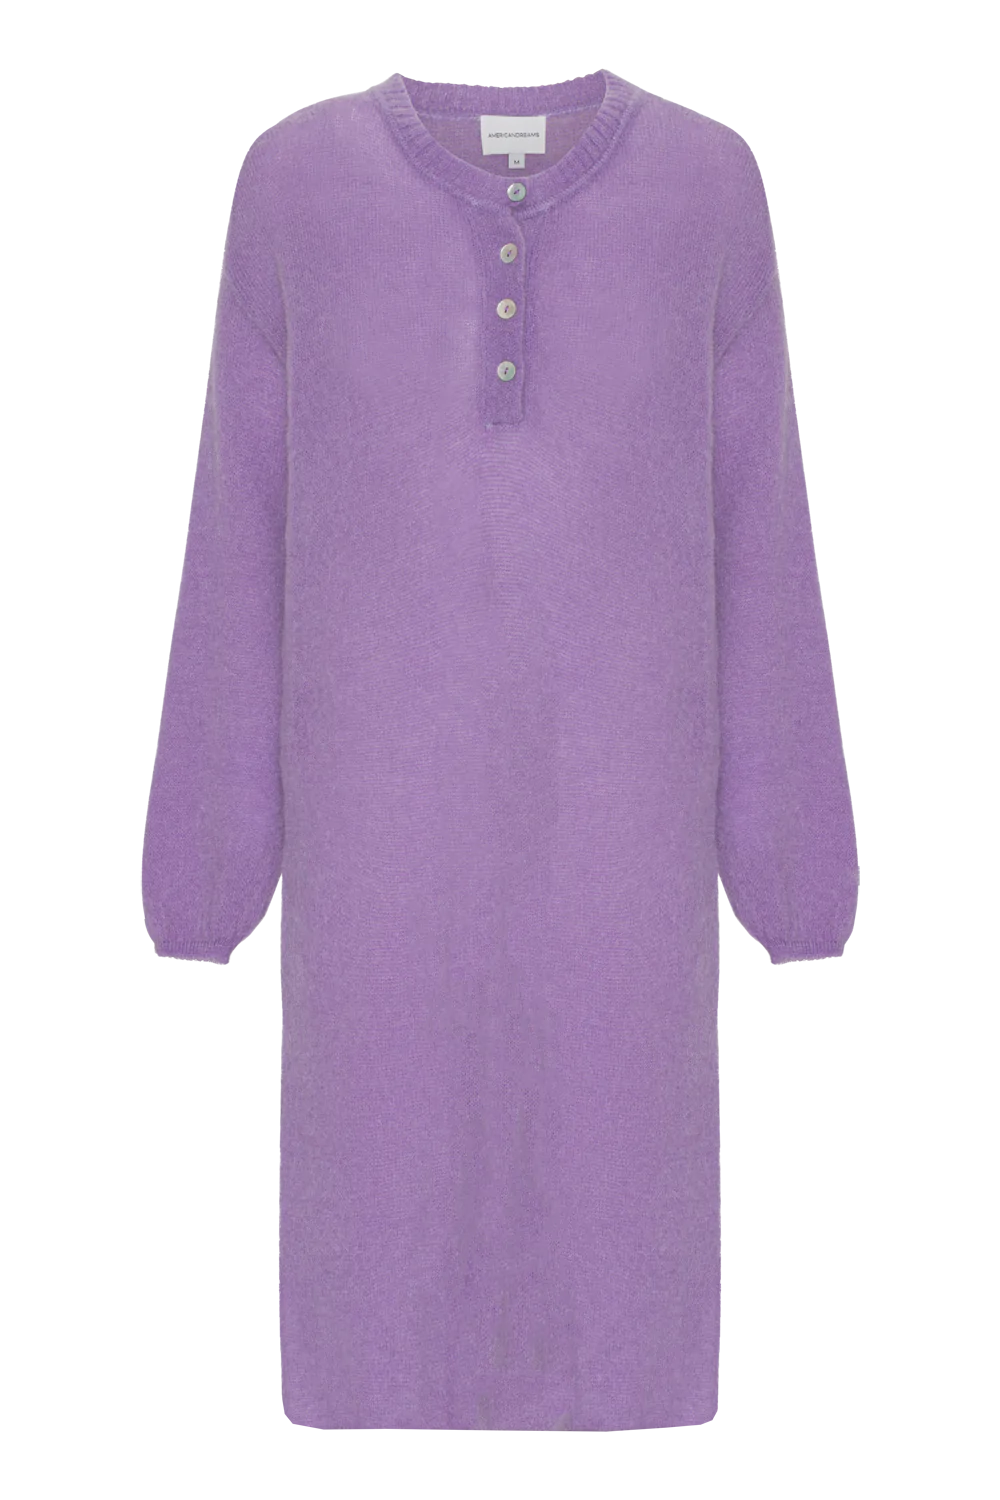 Zelma Dress Lilac - Sample